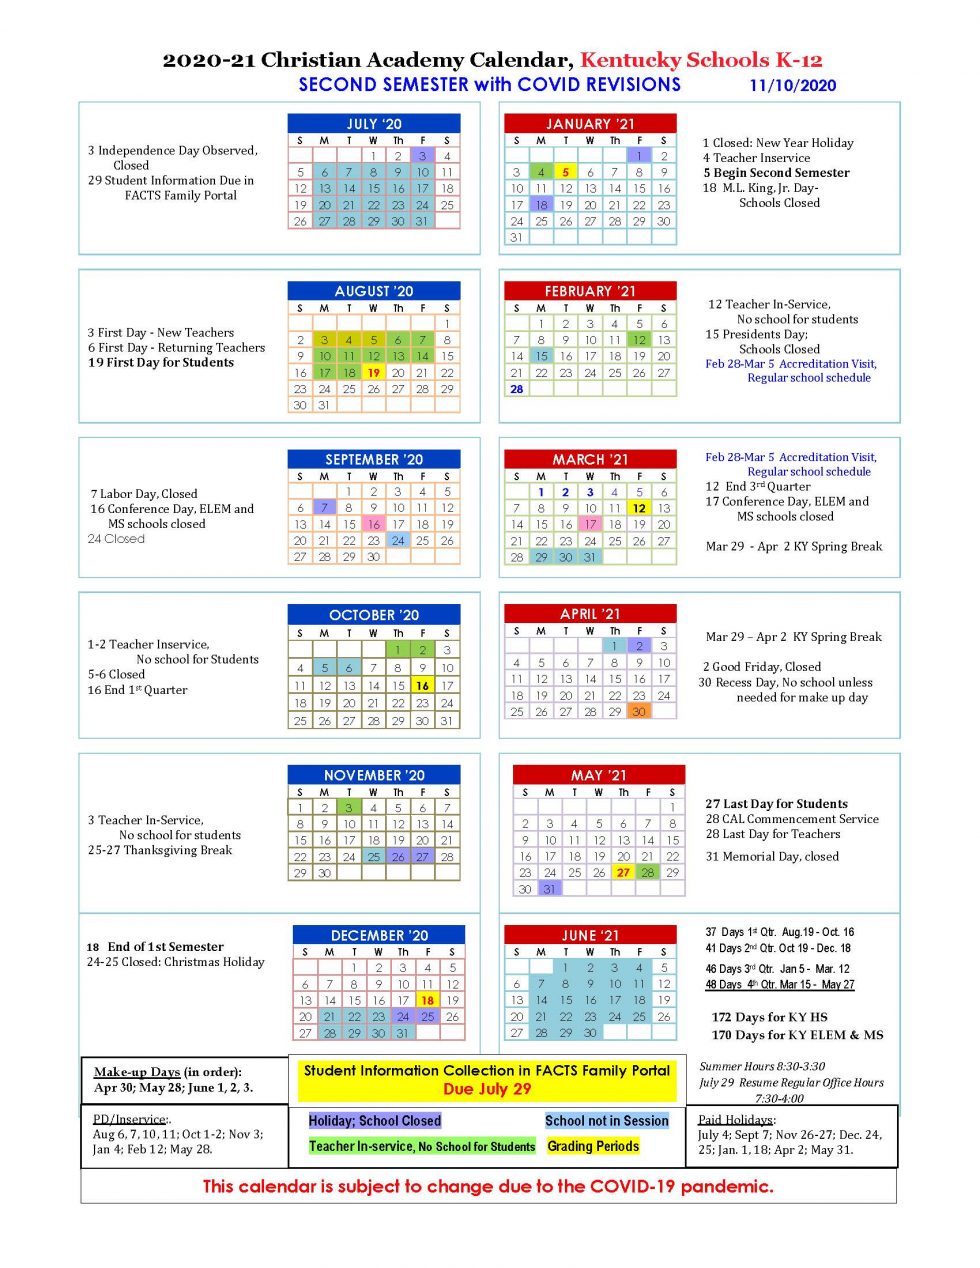 Calendars | Christian Academy School System